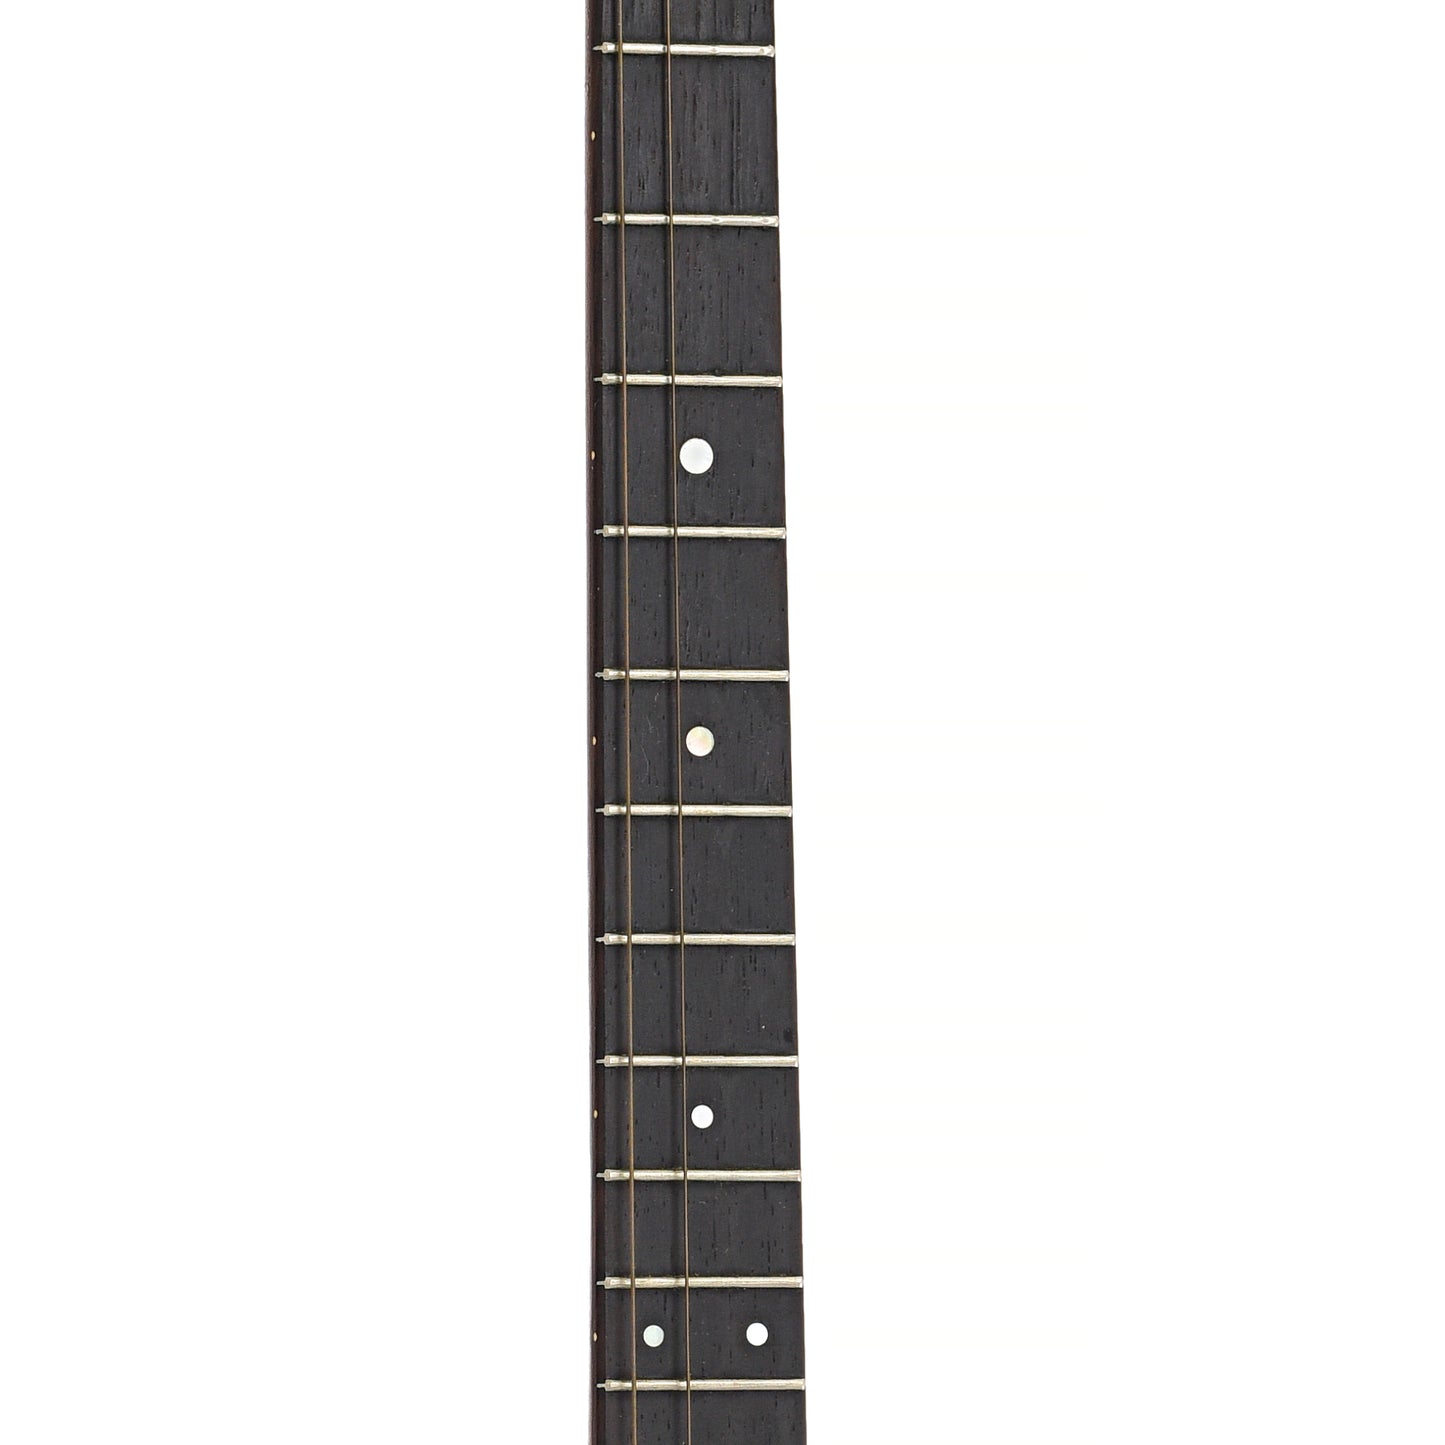 Fretboard of Martin 0-18T Tenor Guitar (1943)